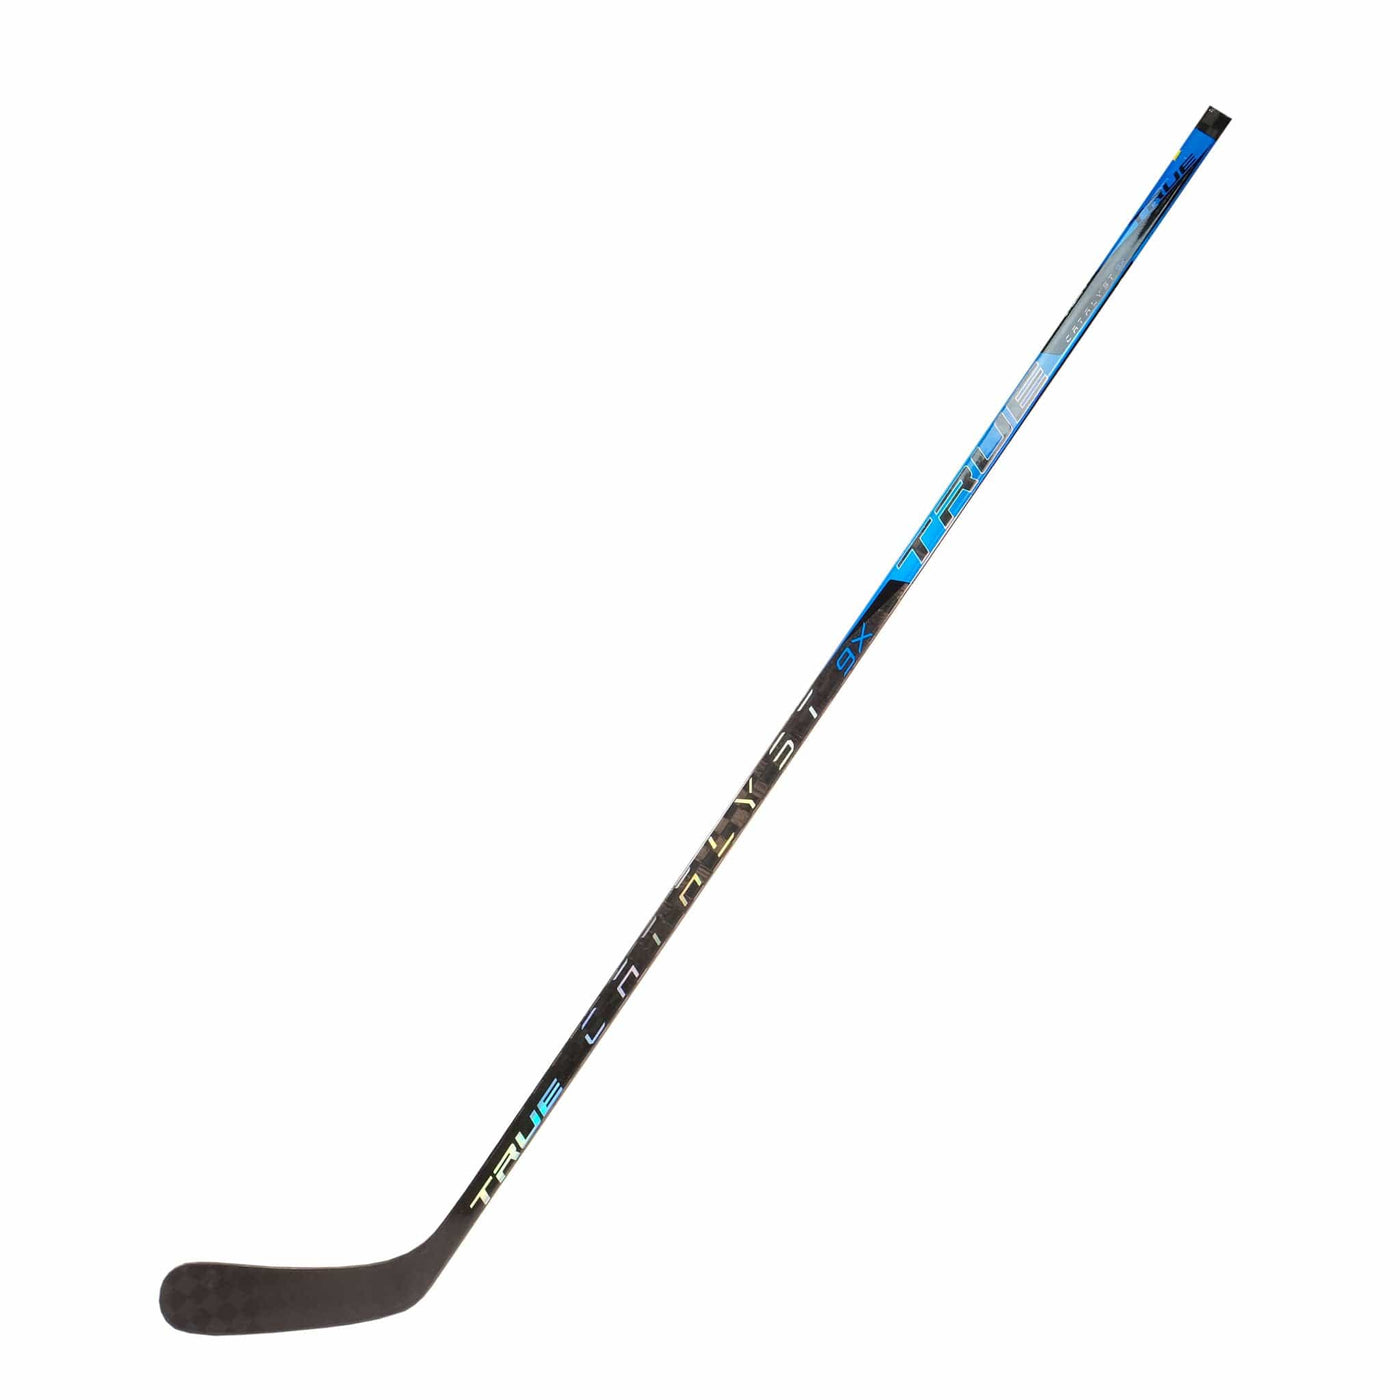 TRUE Catalyst 9X Pro Stock Senior Hockey Stick - Jacob Trouba - TC2M - R-100 - The Hockey Shop Source For Sports